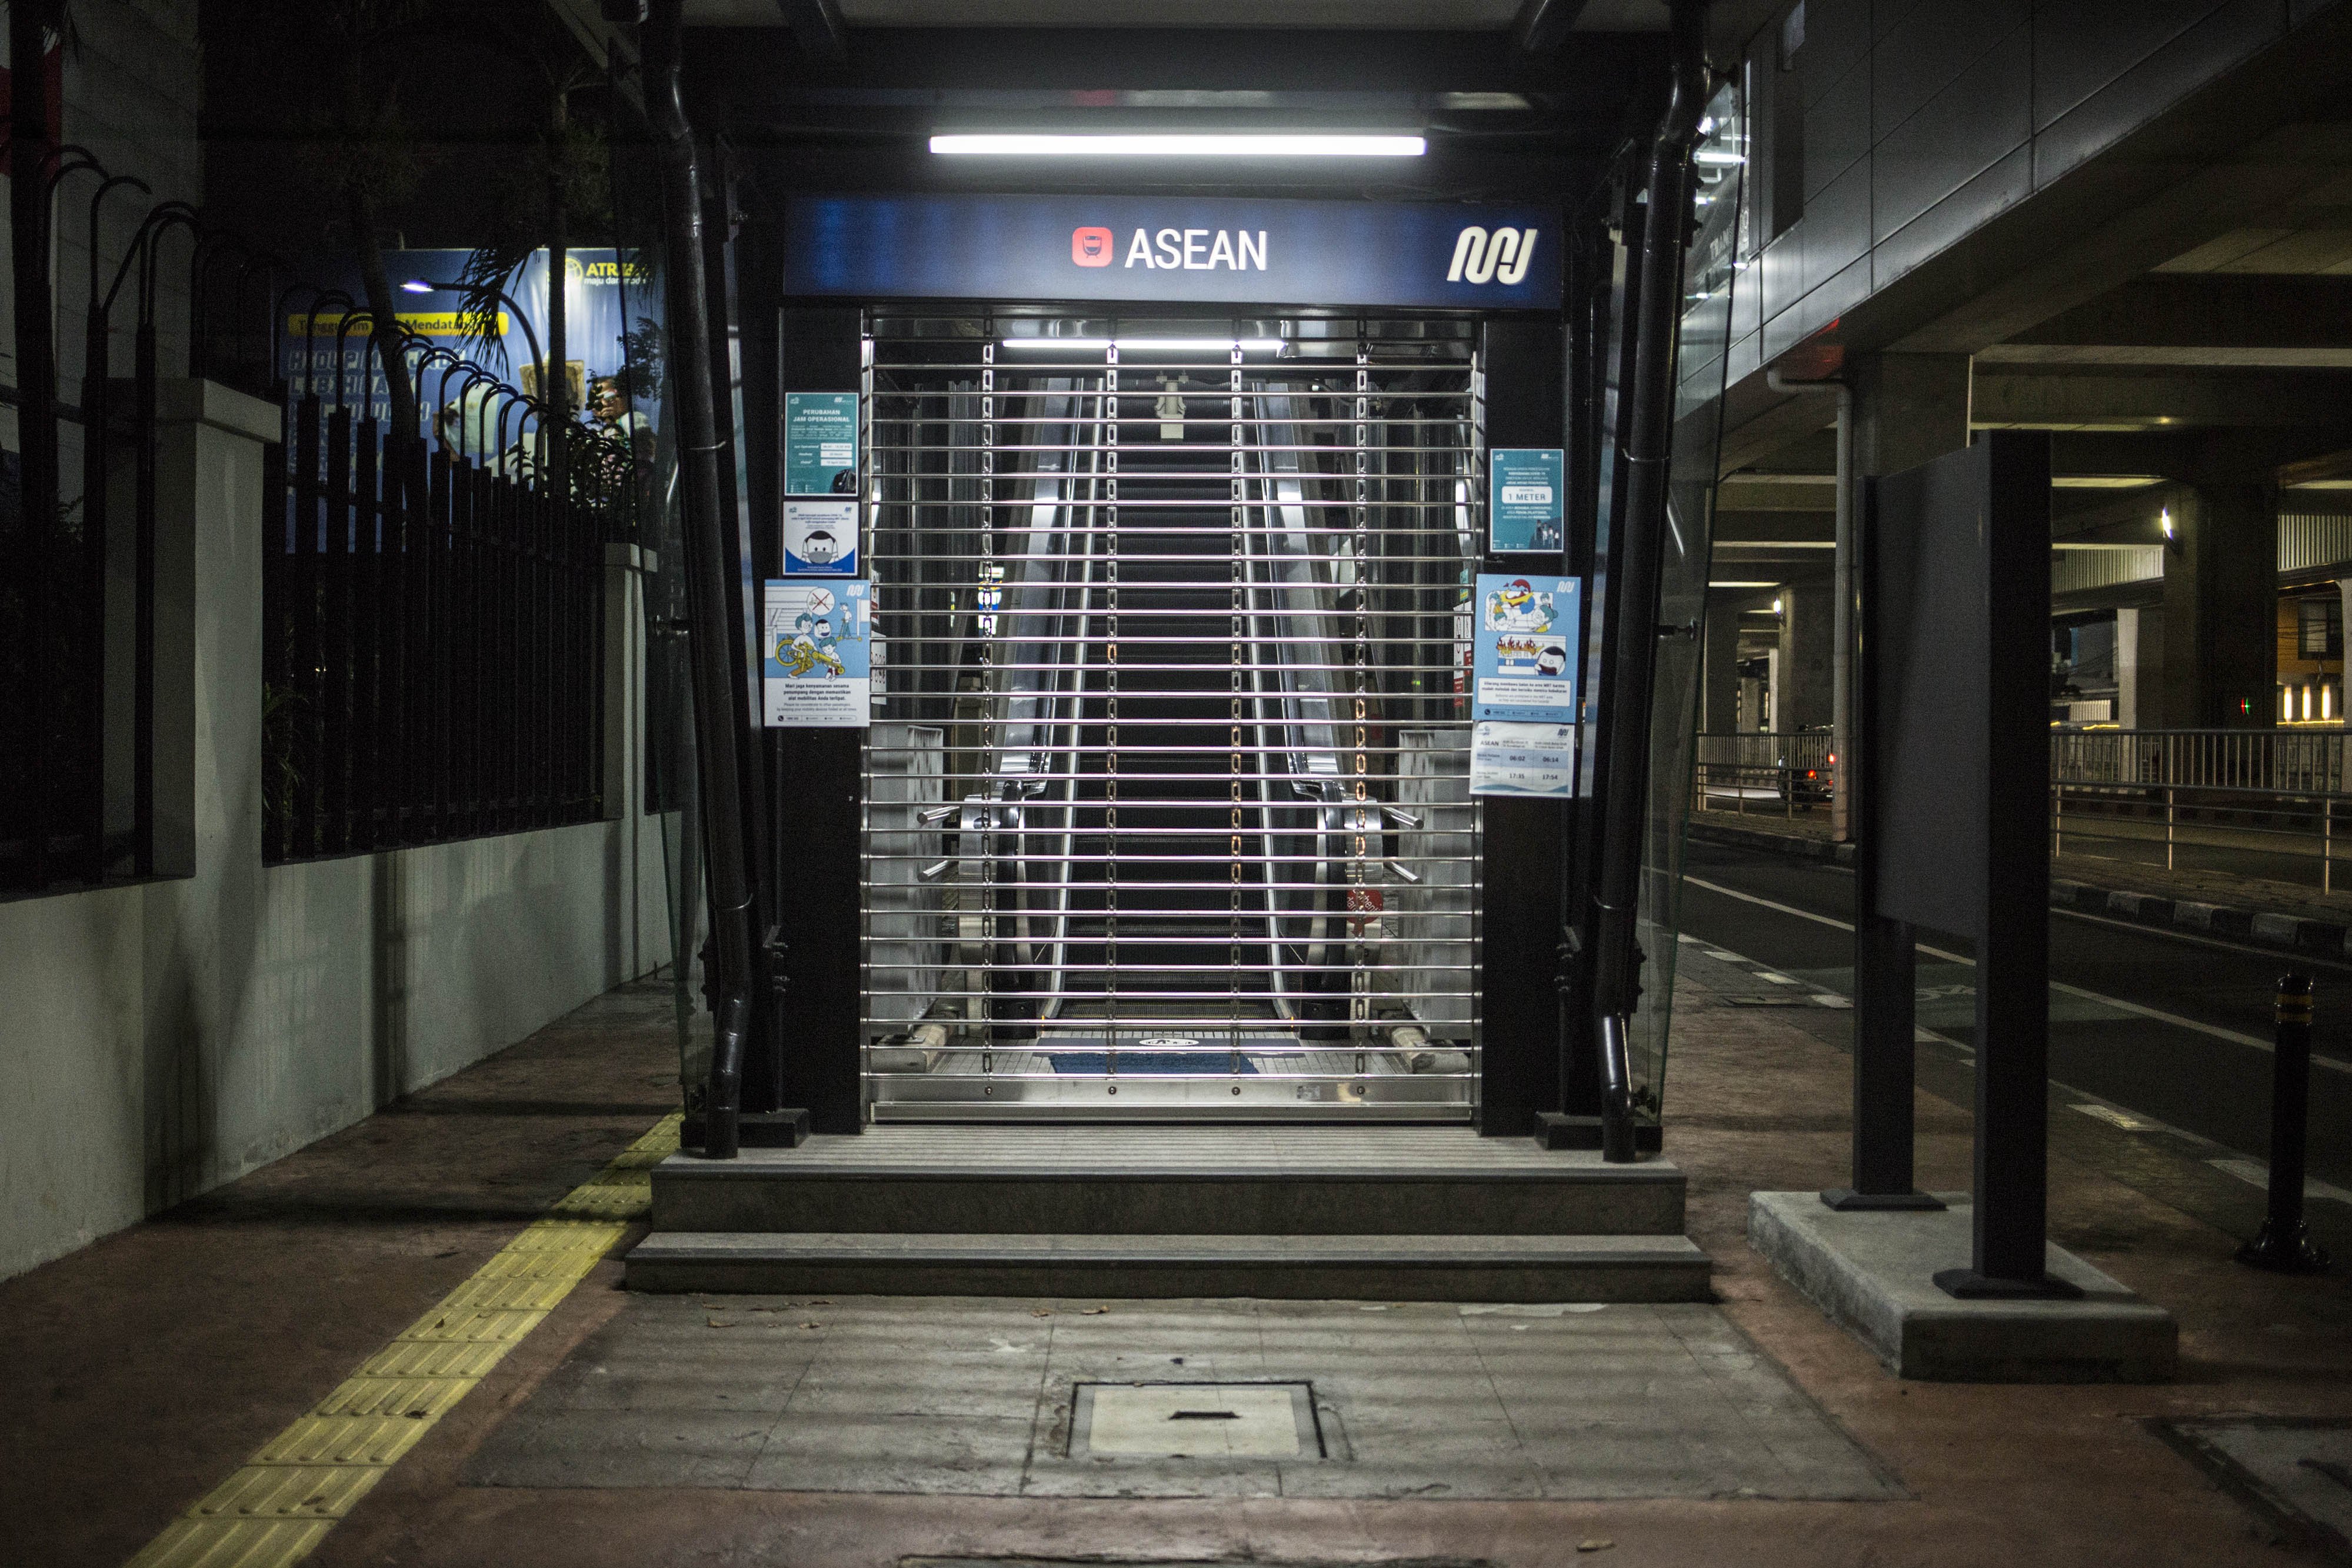 Suasana Stasiun MRT Asean, Jakarta Selatan, yang telah tutup dikarenakan adanya Pembatasan Sosial Bersekala Besar.